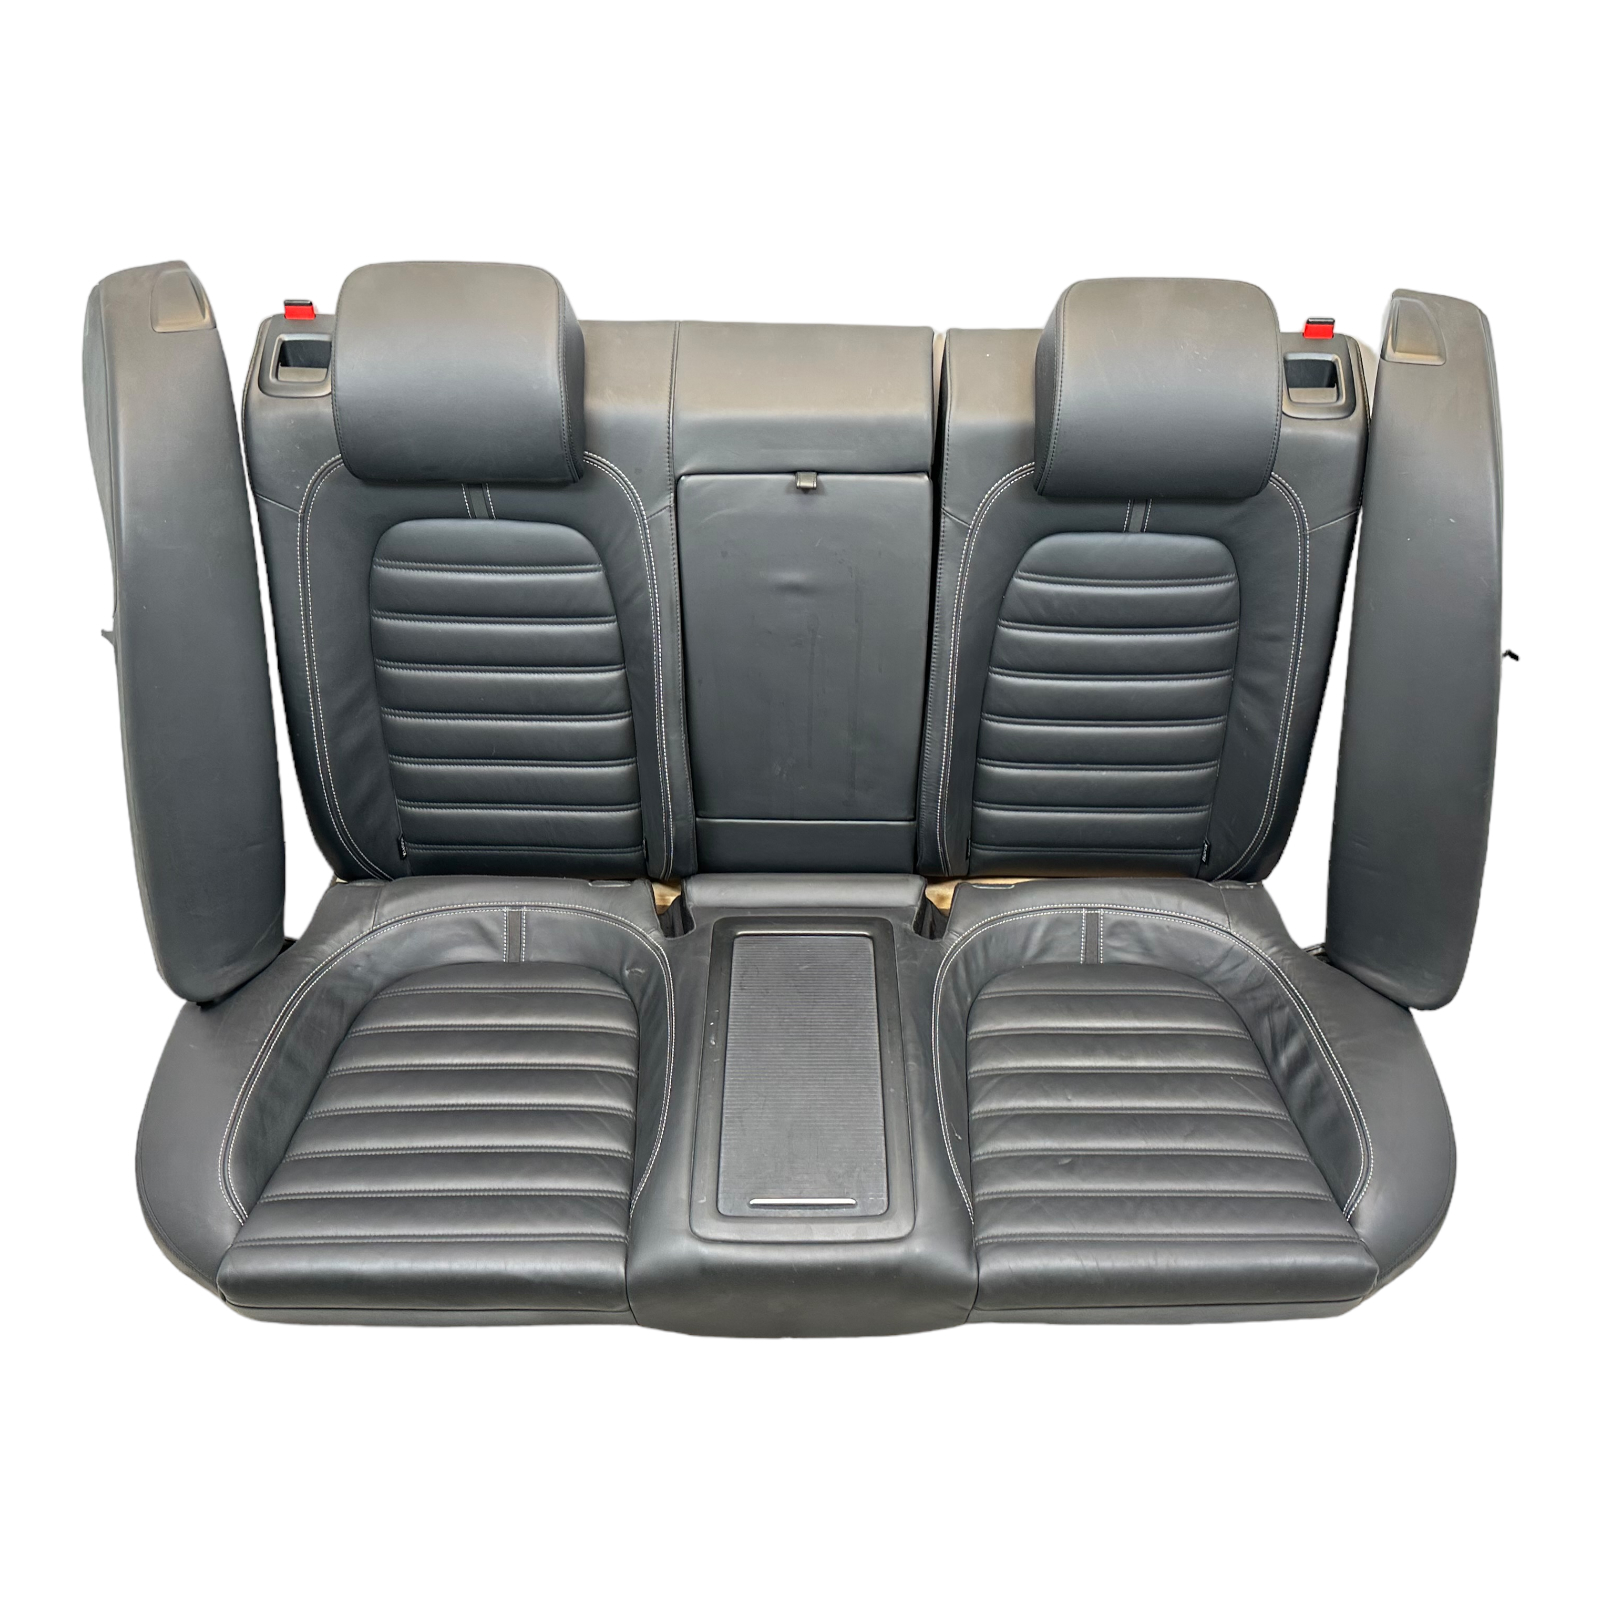 Rücksitzbank Rückbank Sitzbank Leder VW Passat CC 357 schwarz ZU, Sitze,  Rückbänke, Innenraum und Einrichtung